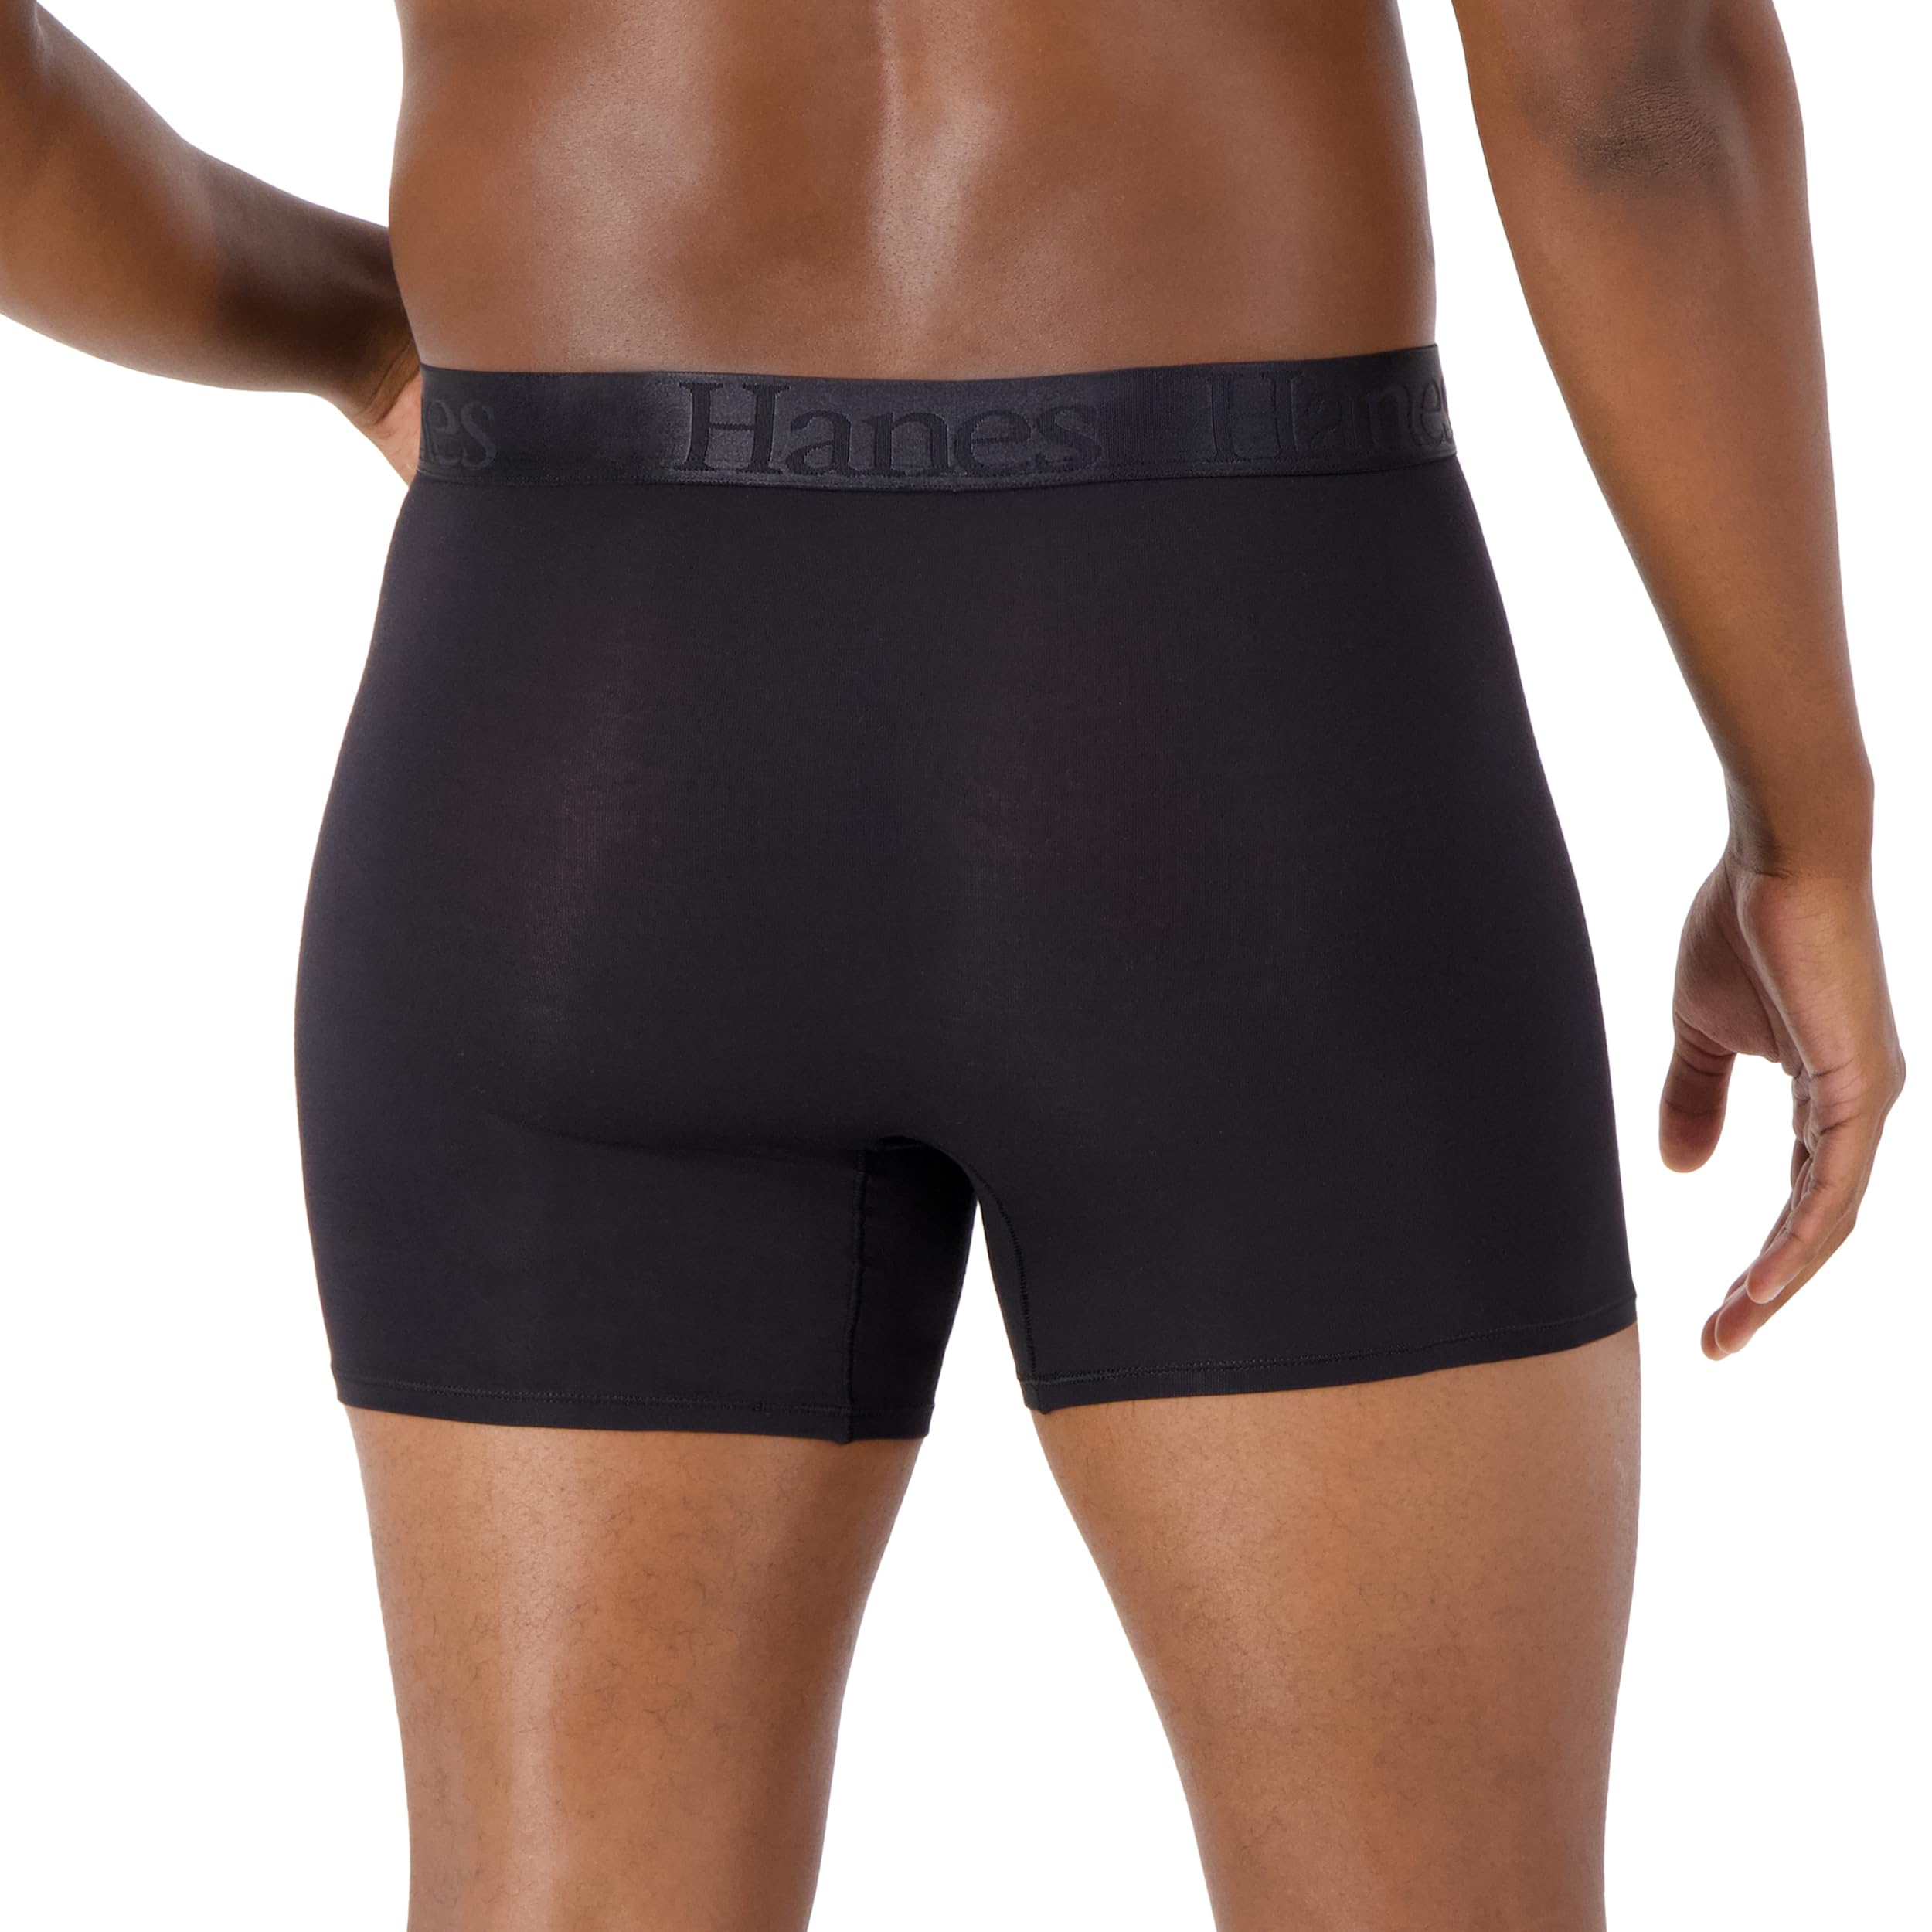 Hanes Men's Originals SuperSoft Boxer Briefs & Trunks, SuperSoft Viscose from Bamboo Underwear, 3-pack